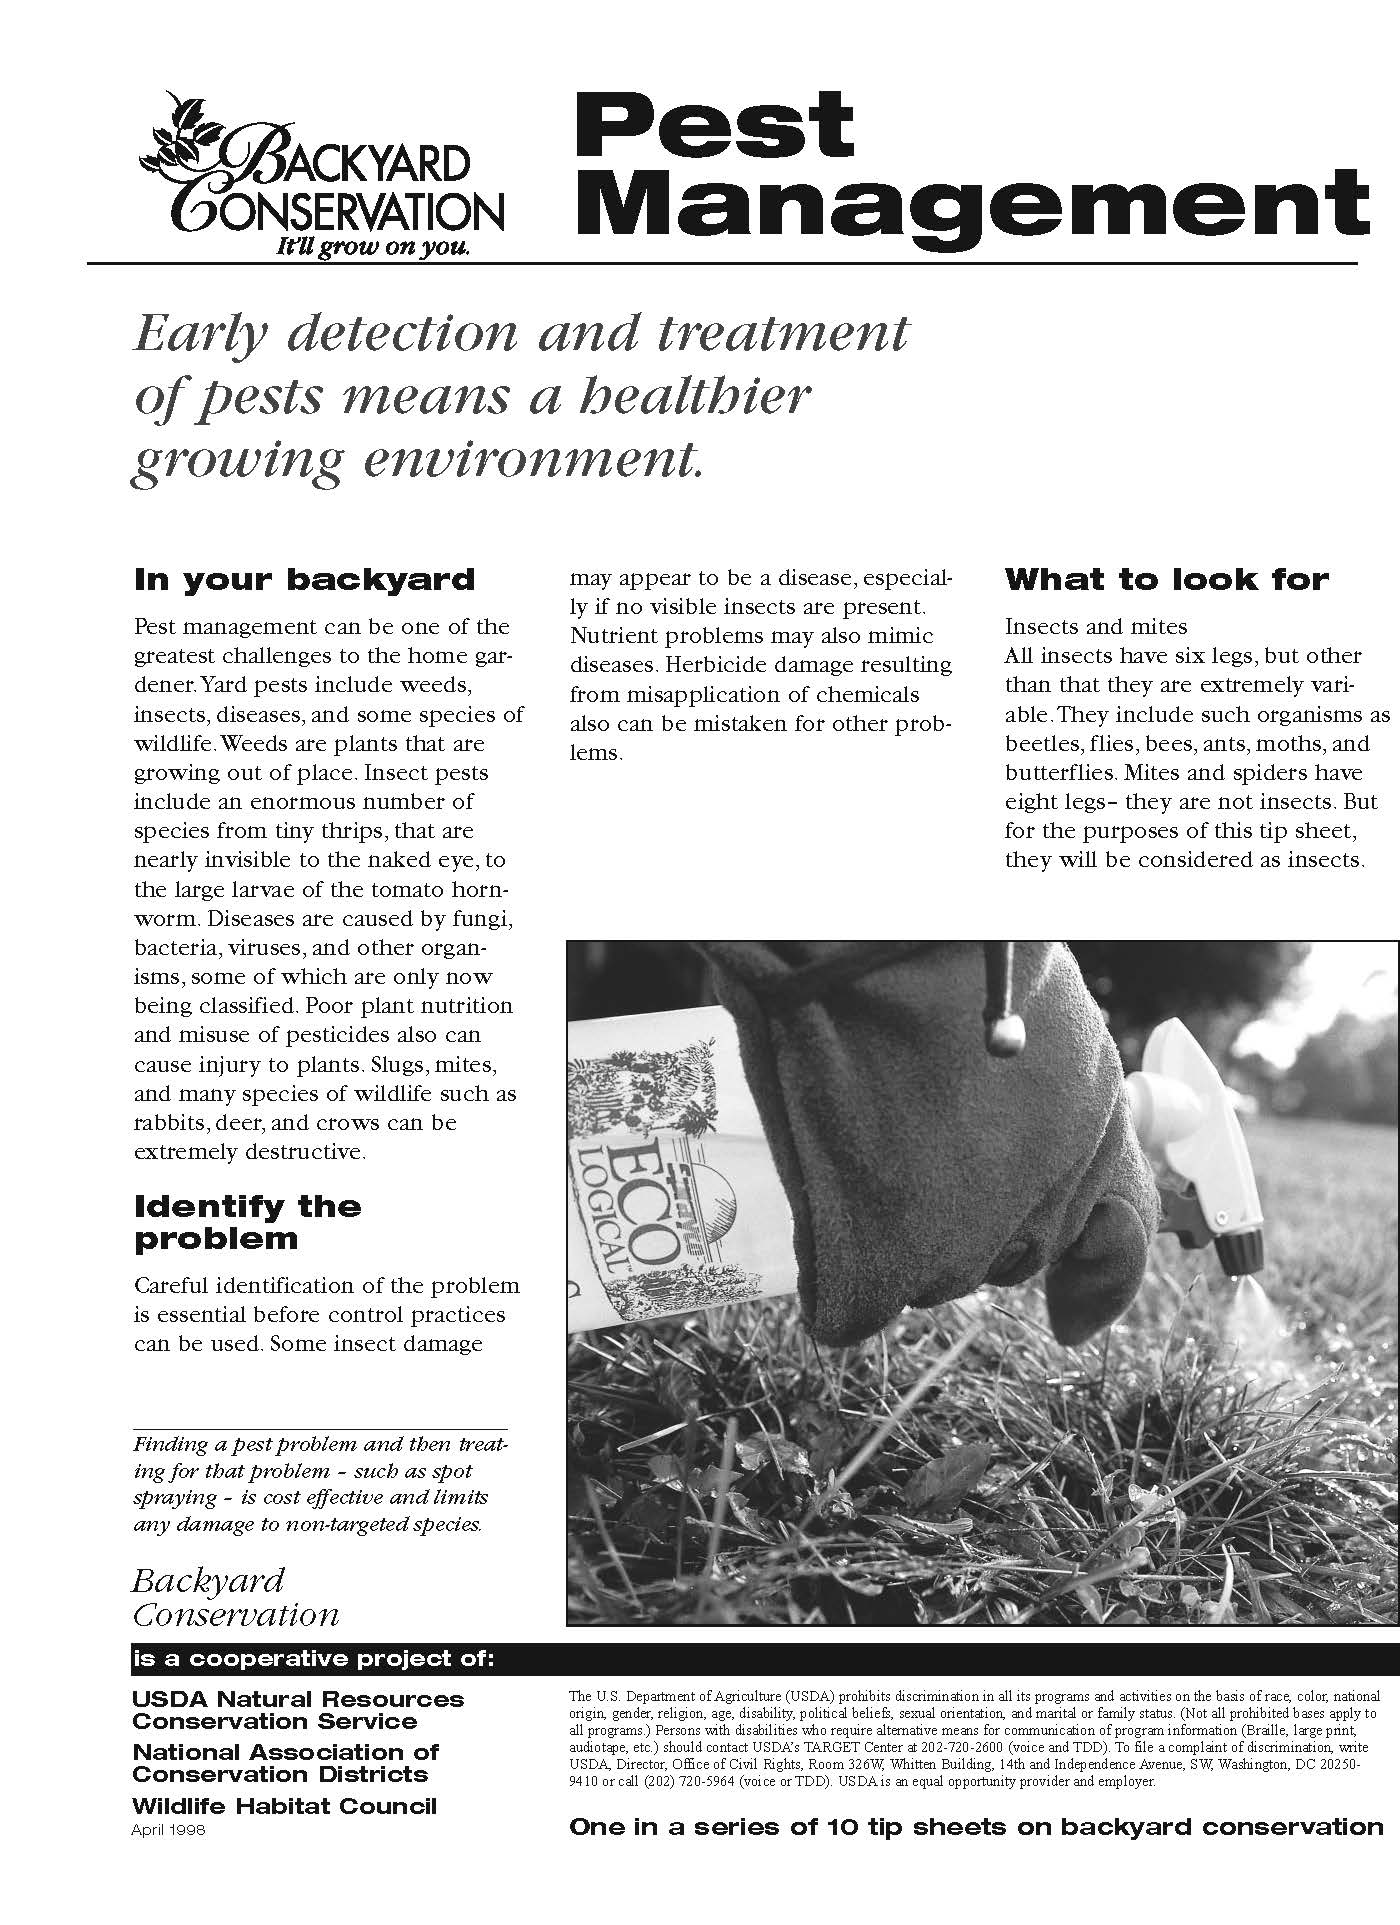 Backyard Conservation Pest Management tip sheet